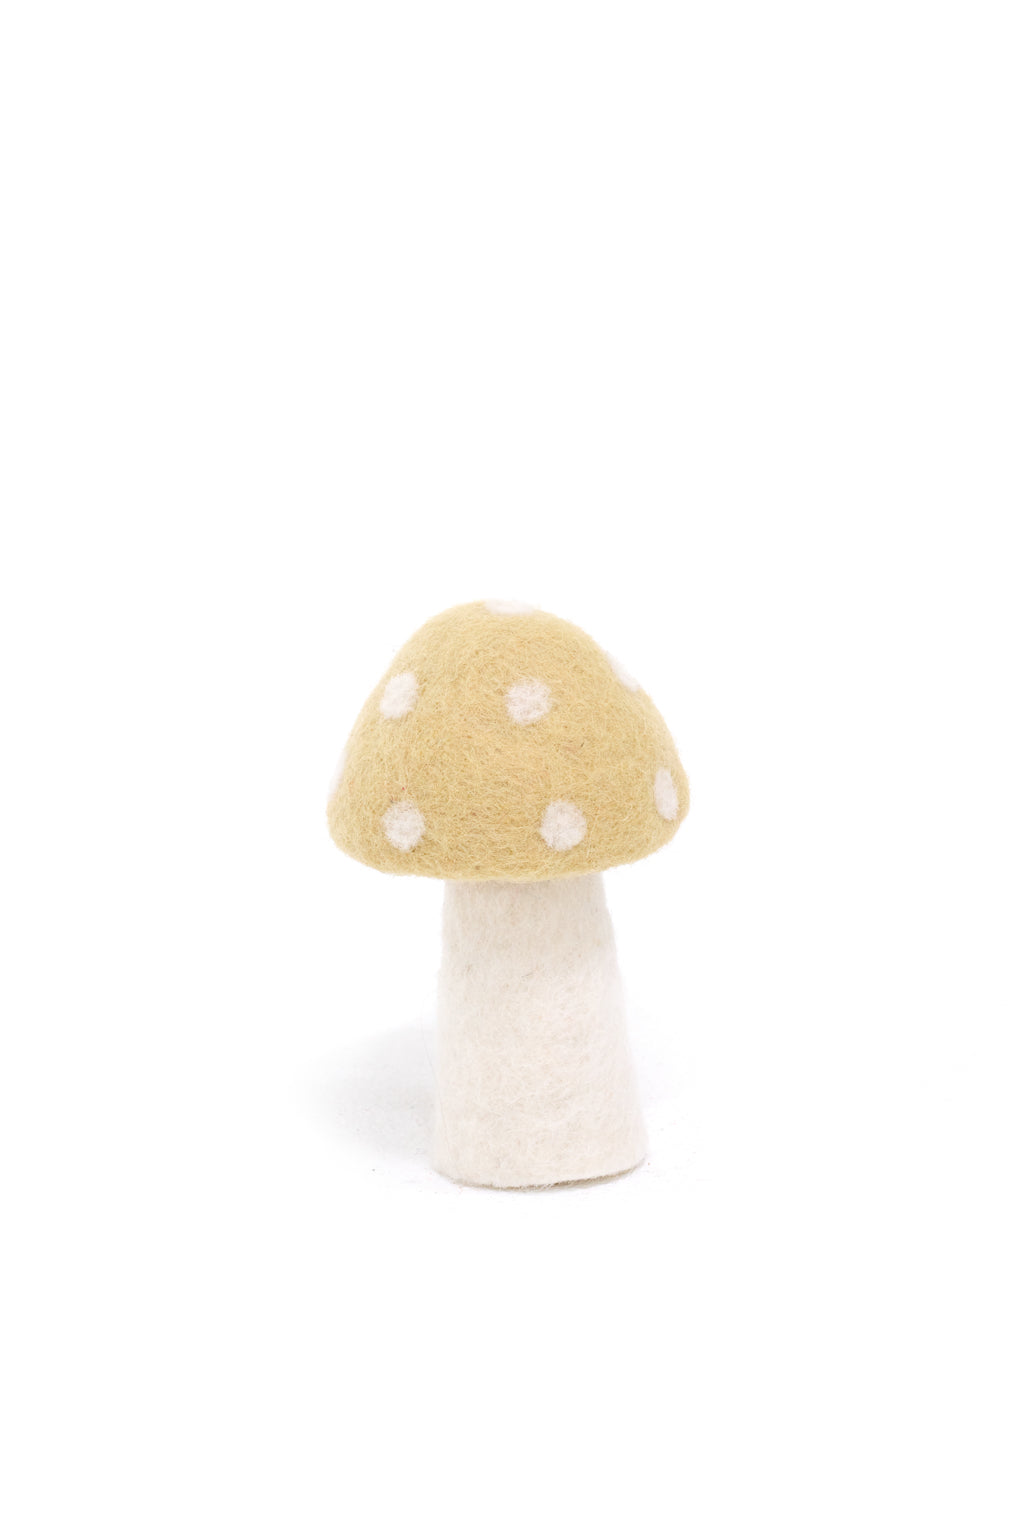 Dotty Mushroom - Large 11cm